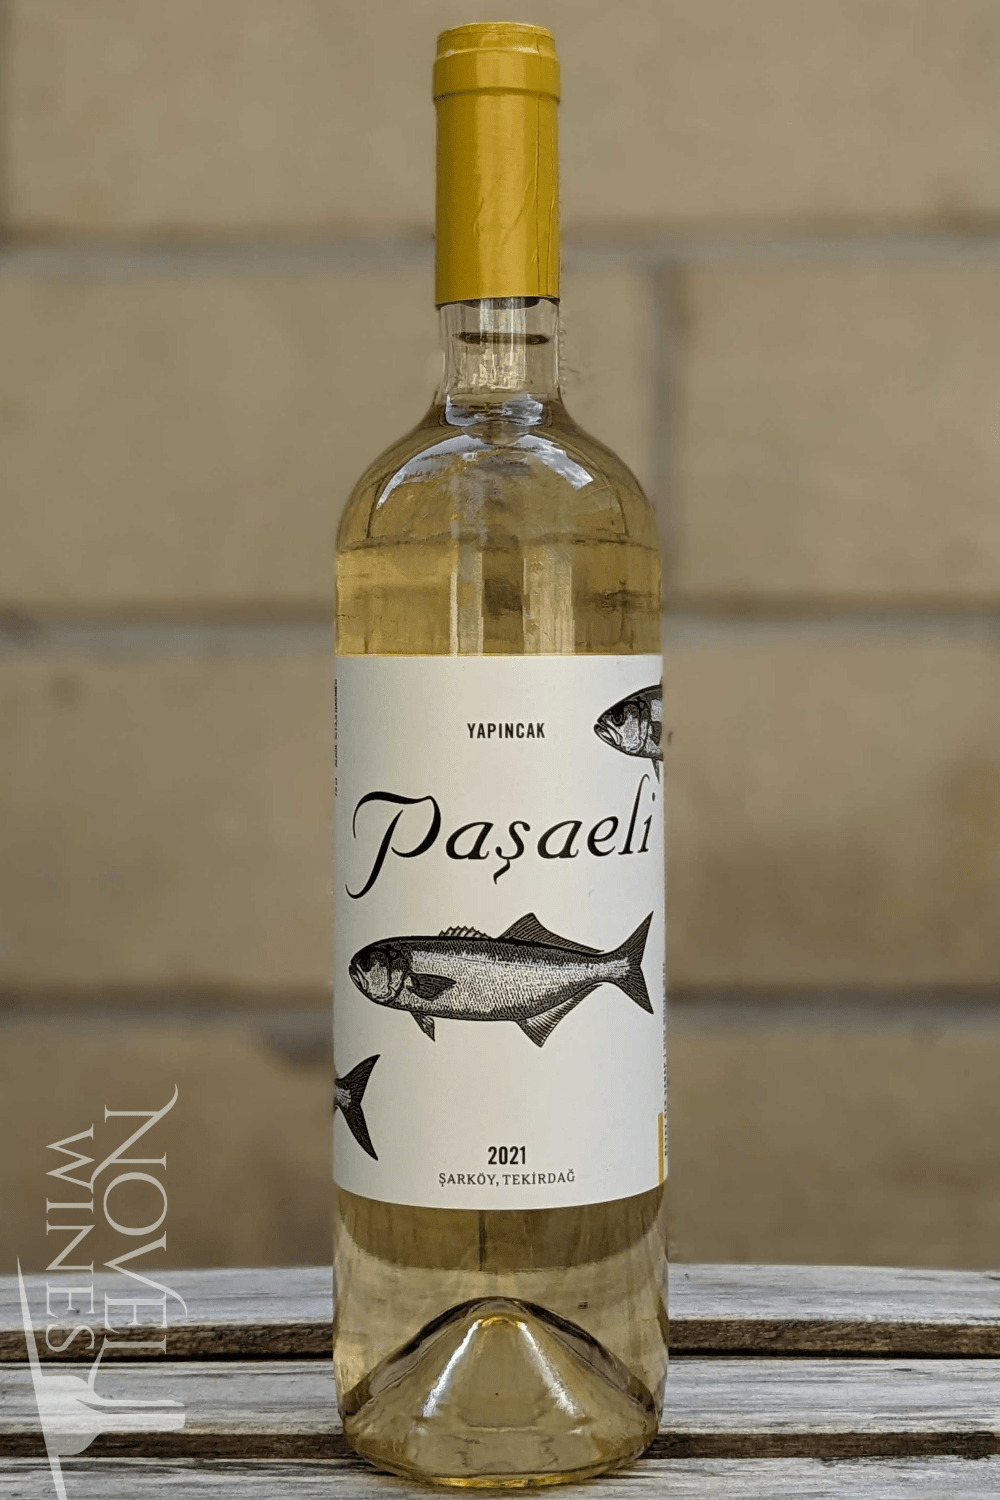 Novel Wines White Wine Pasaeli Şarköy Yapincak Limited Edition 2021, Turkey